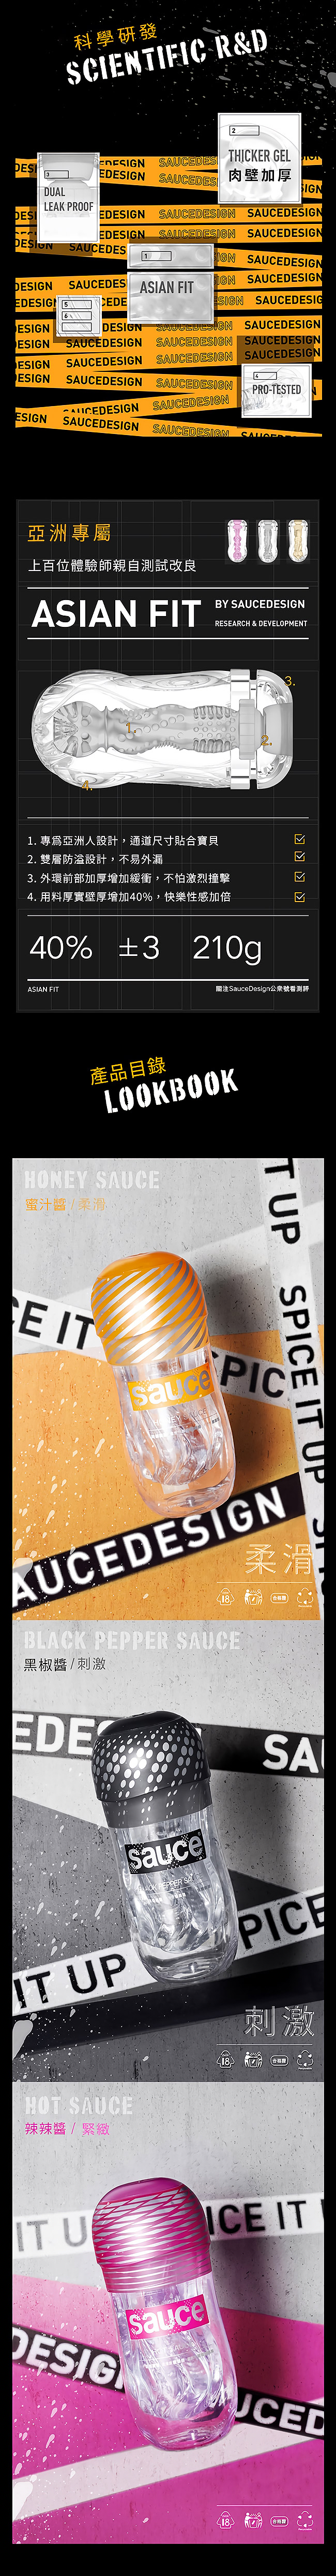 Sauce．蜜汁醬 柔滑通道消音火箭飛機杯